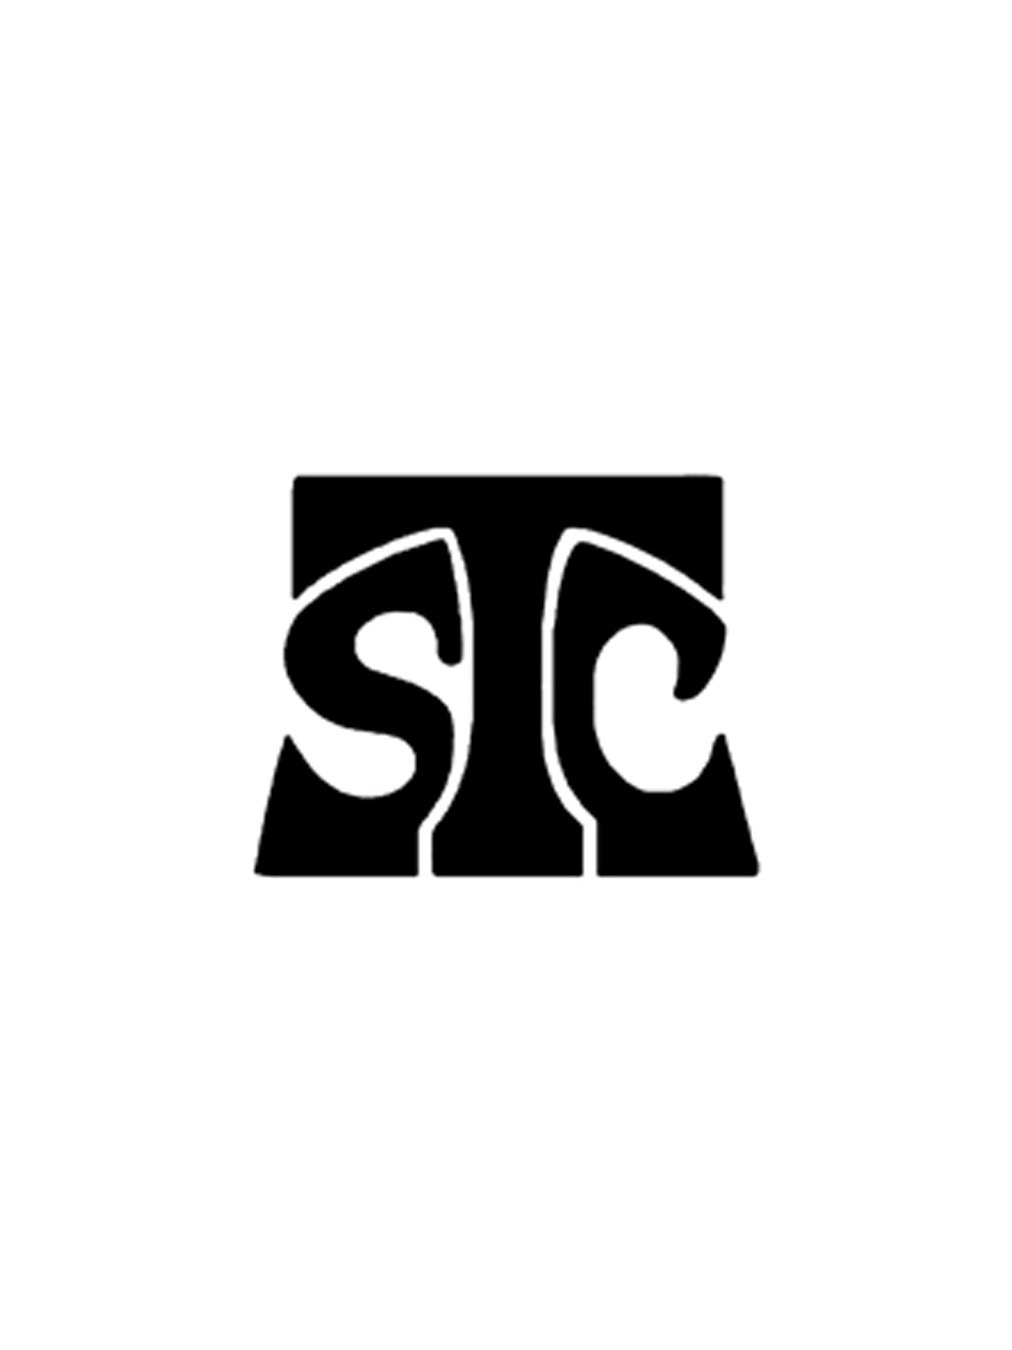 Trademark Logo STC